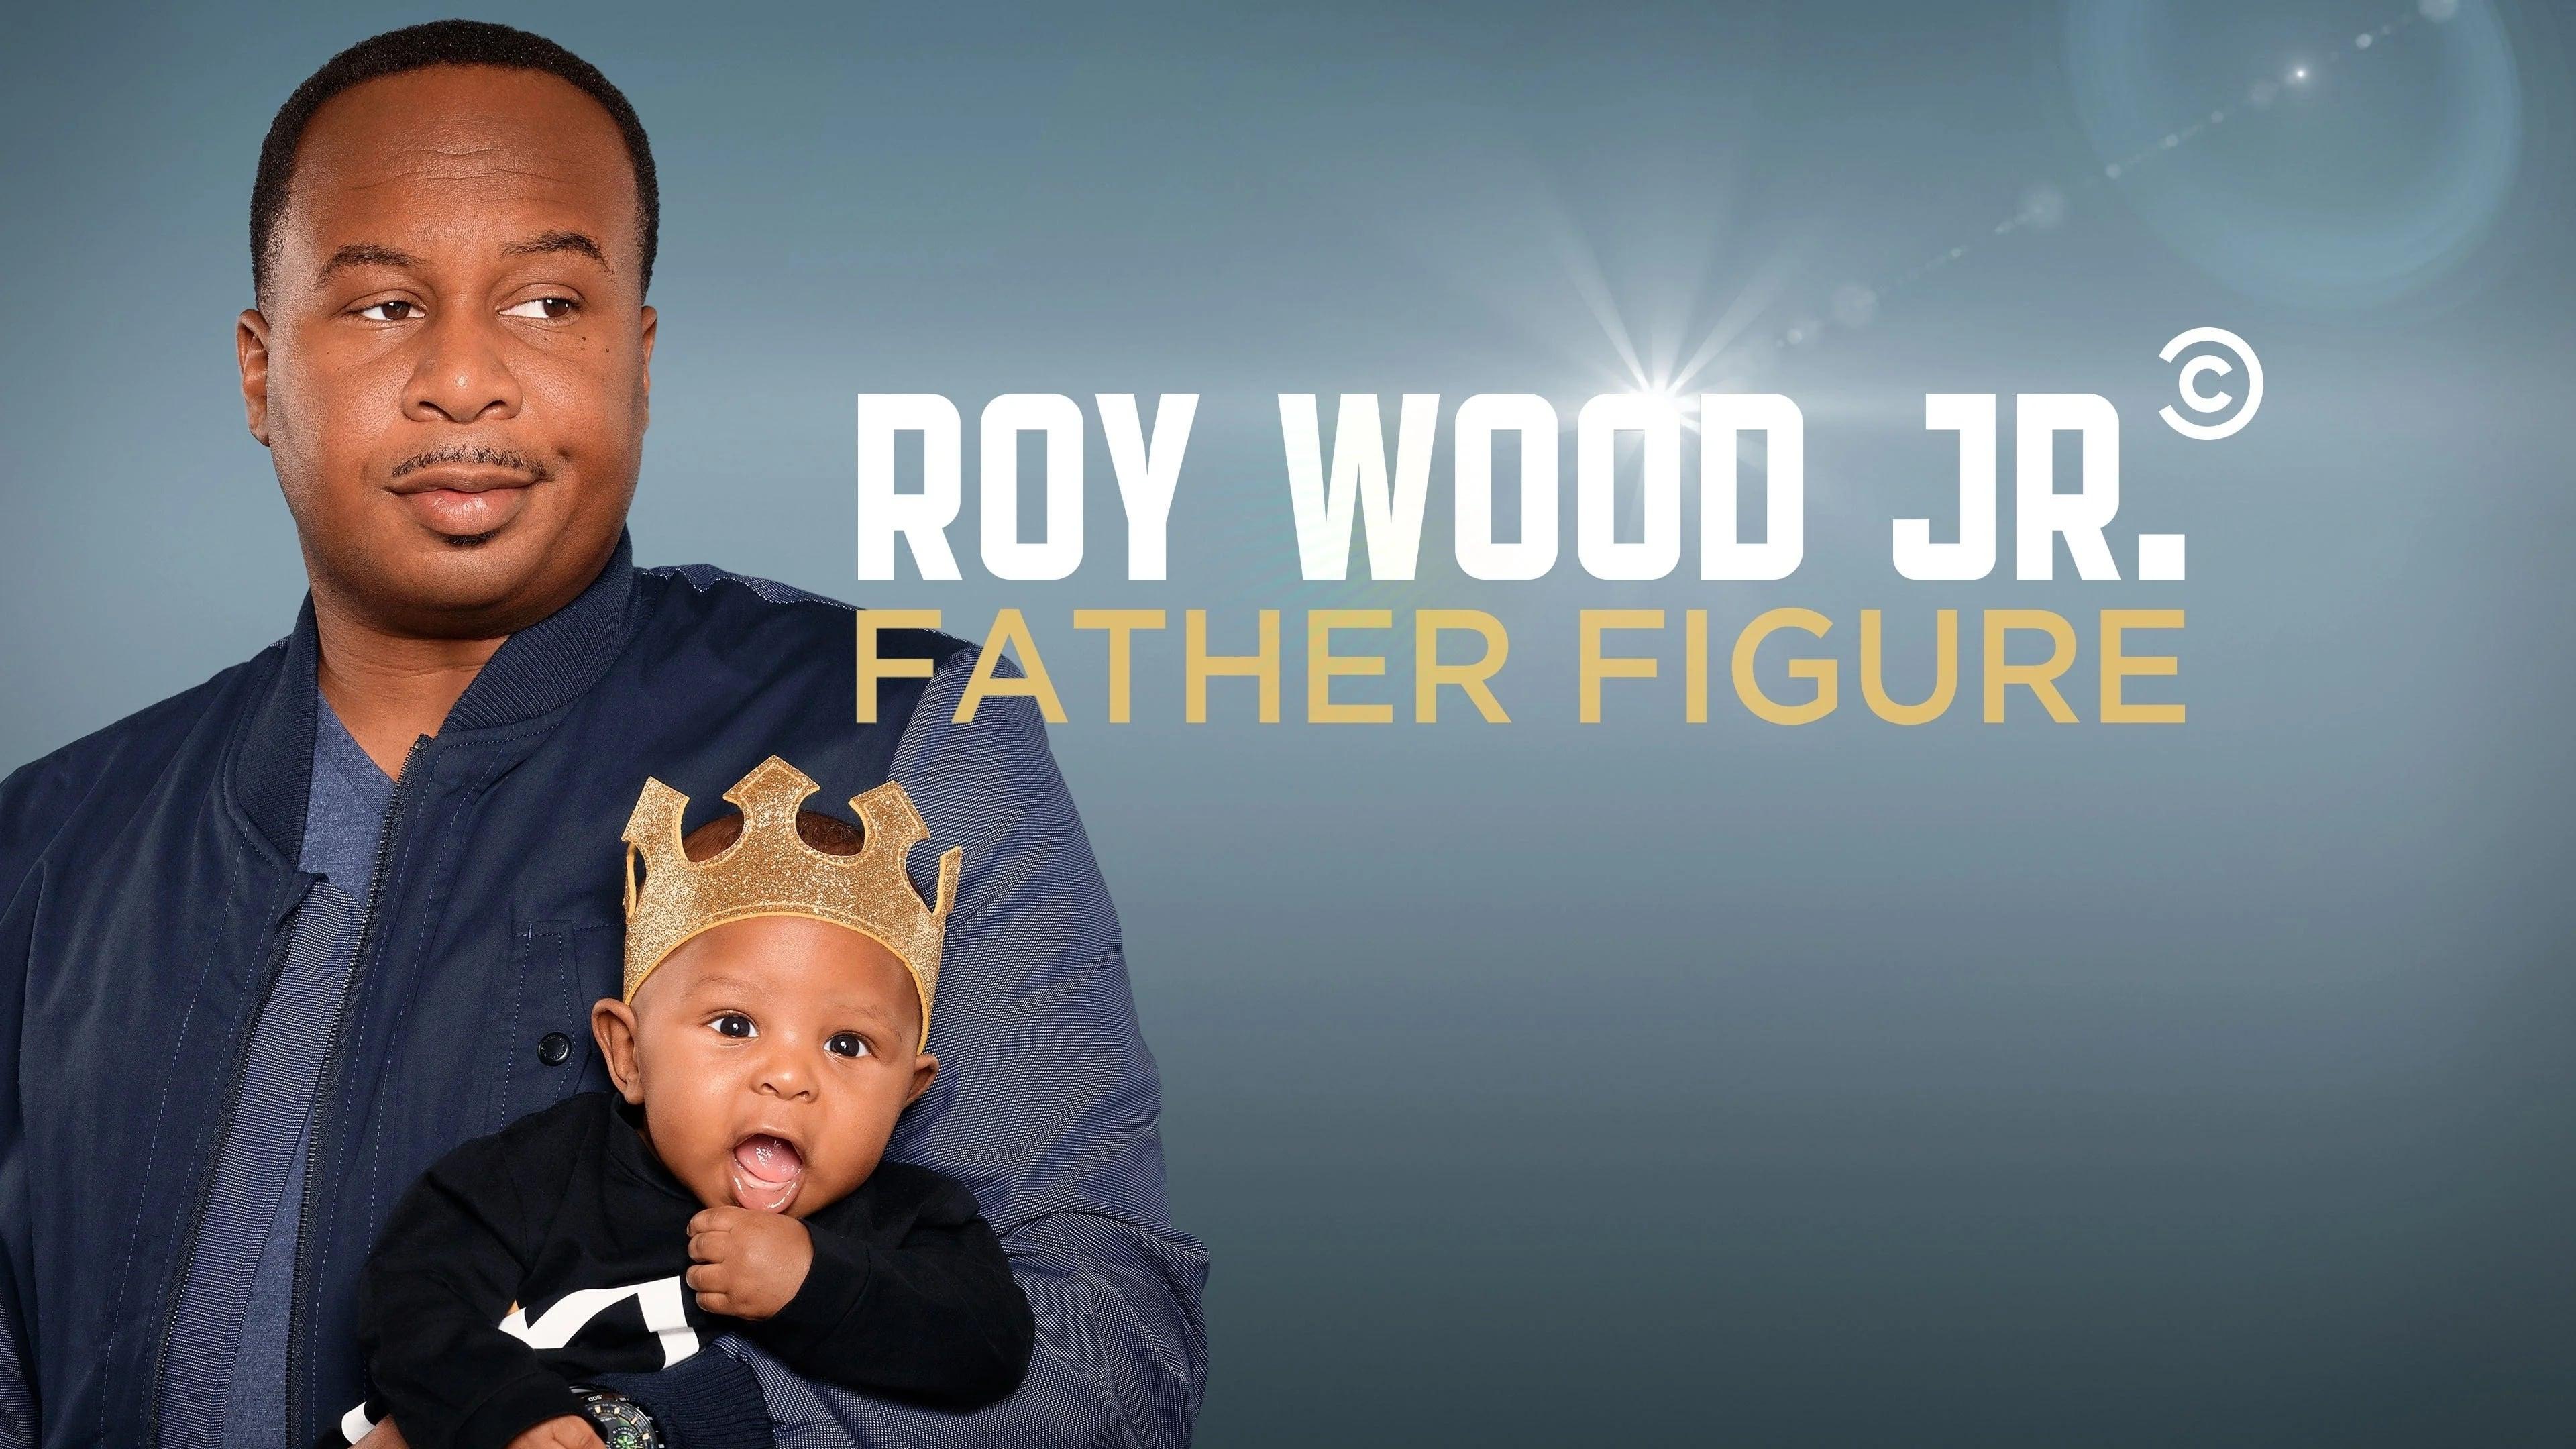 Roy Wood Jr.: Father Figure backdrop